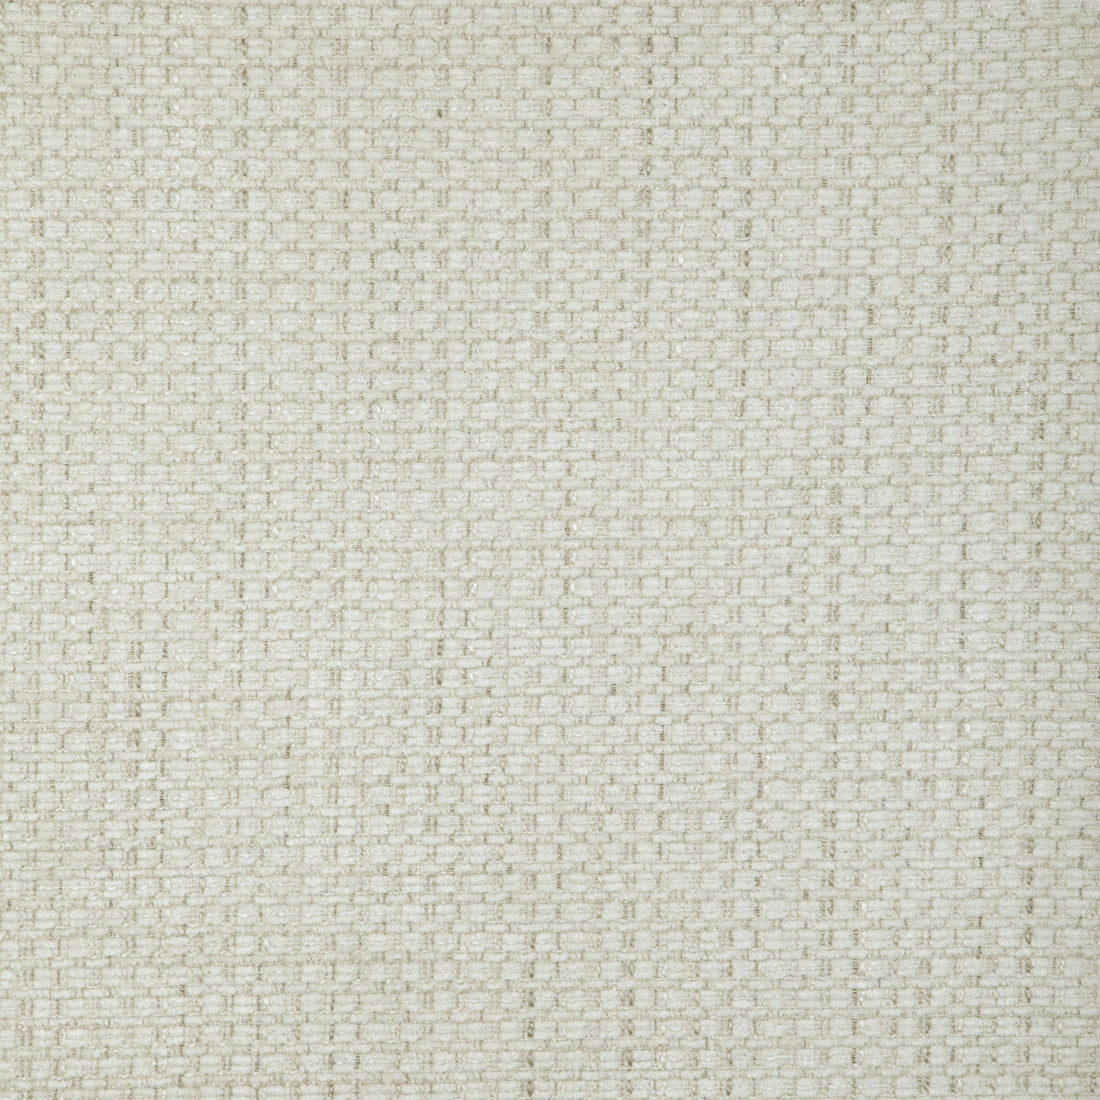 Kravet Smart fabric in 36996-101 color - pattern 36996.101.0 - by Kravet Smart